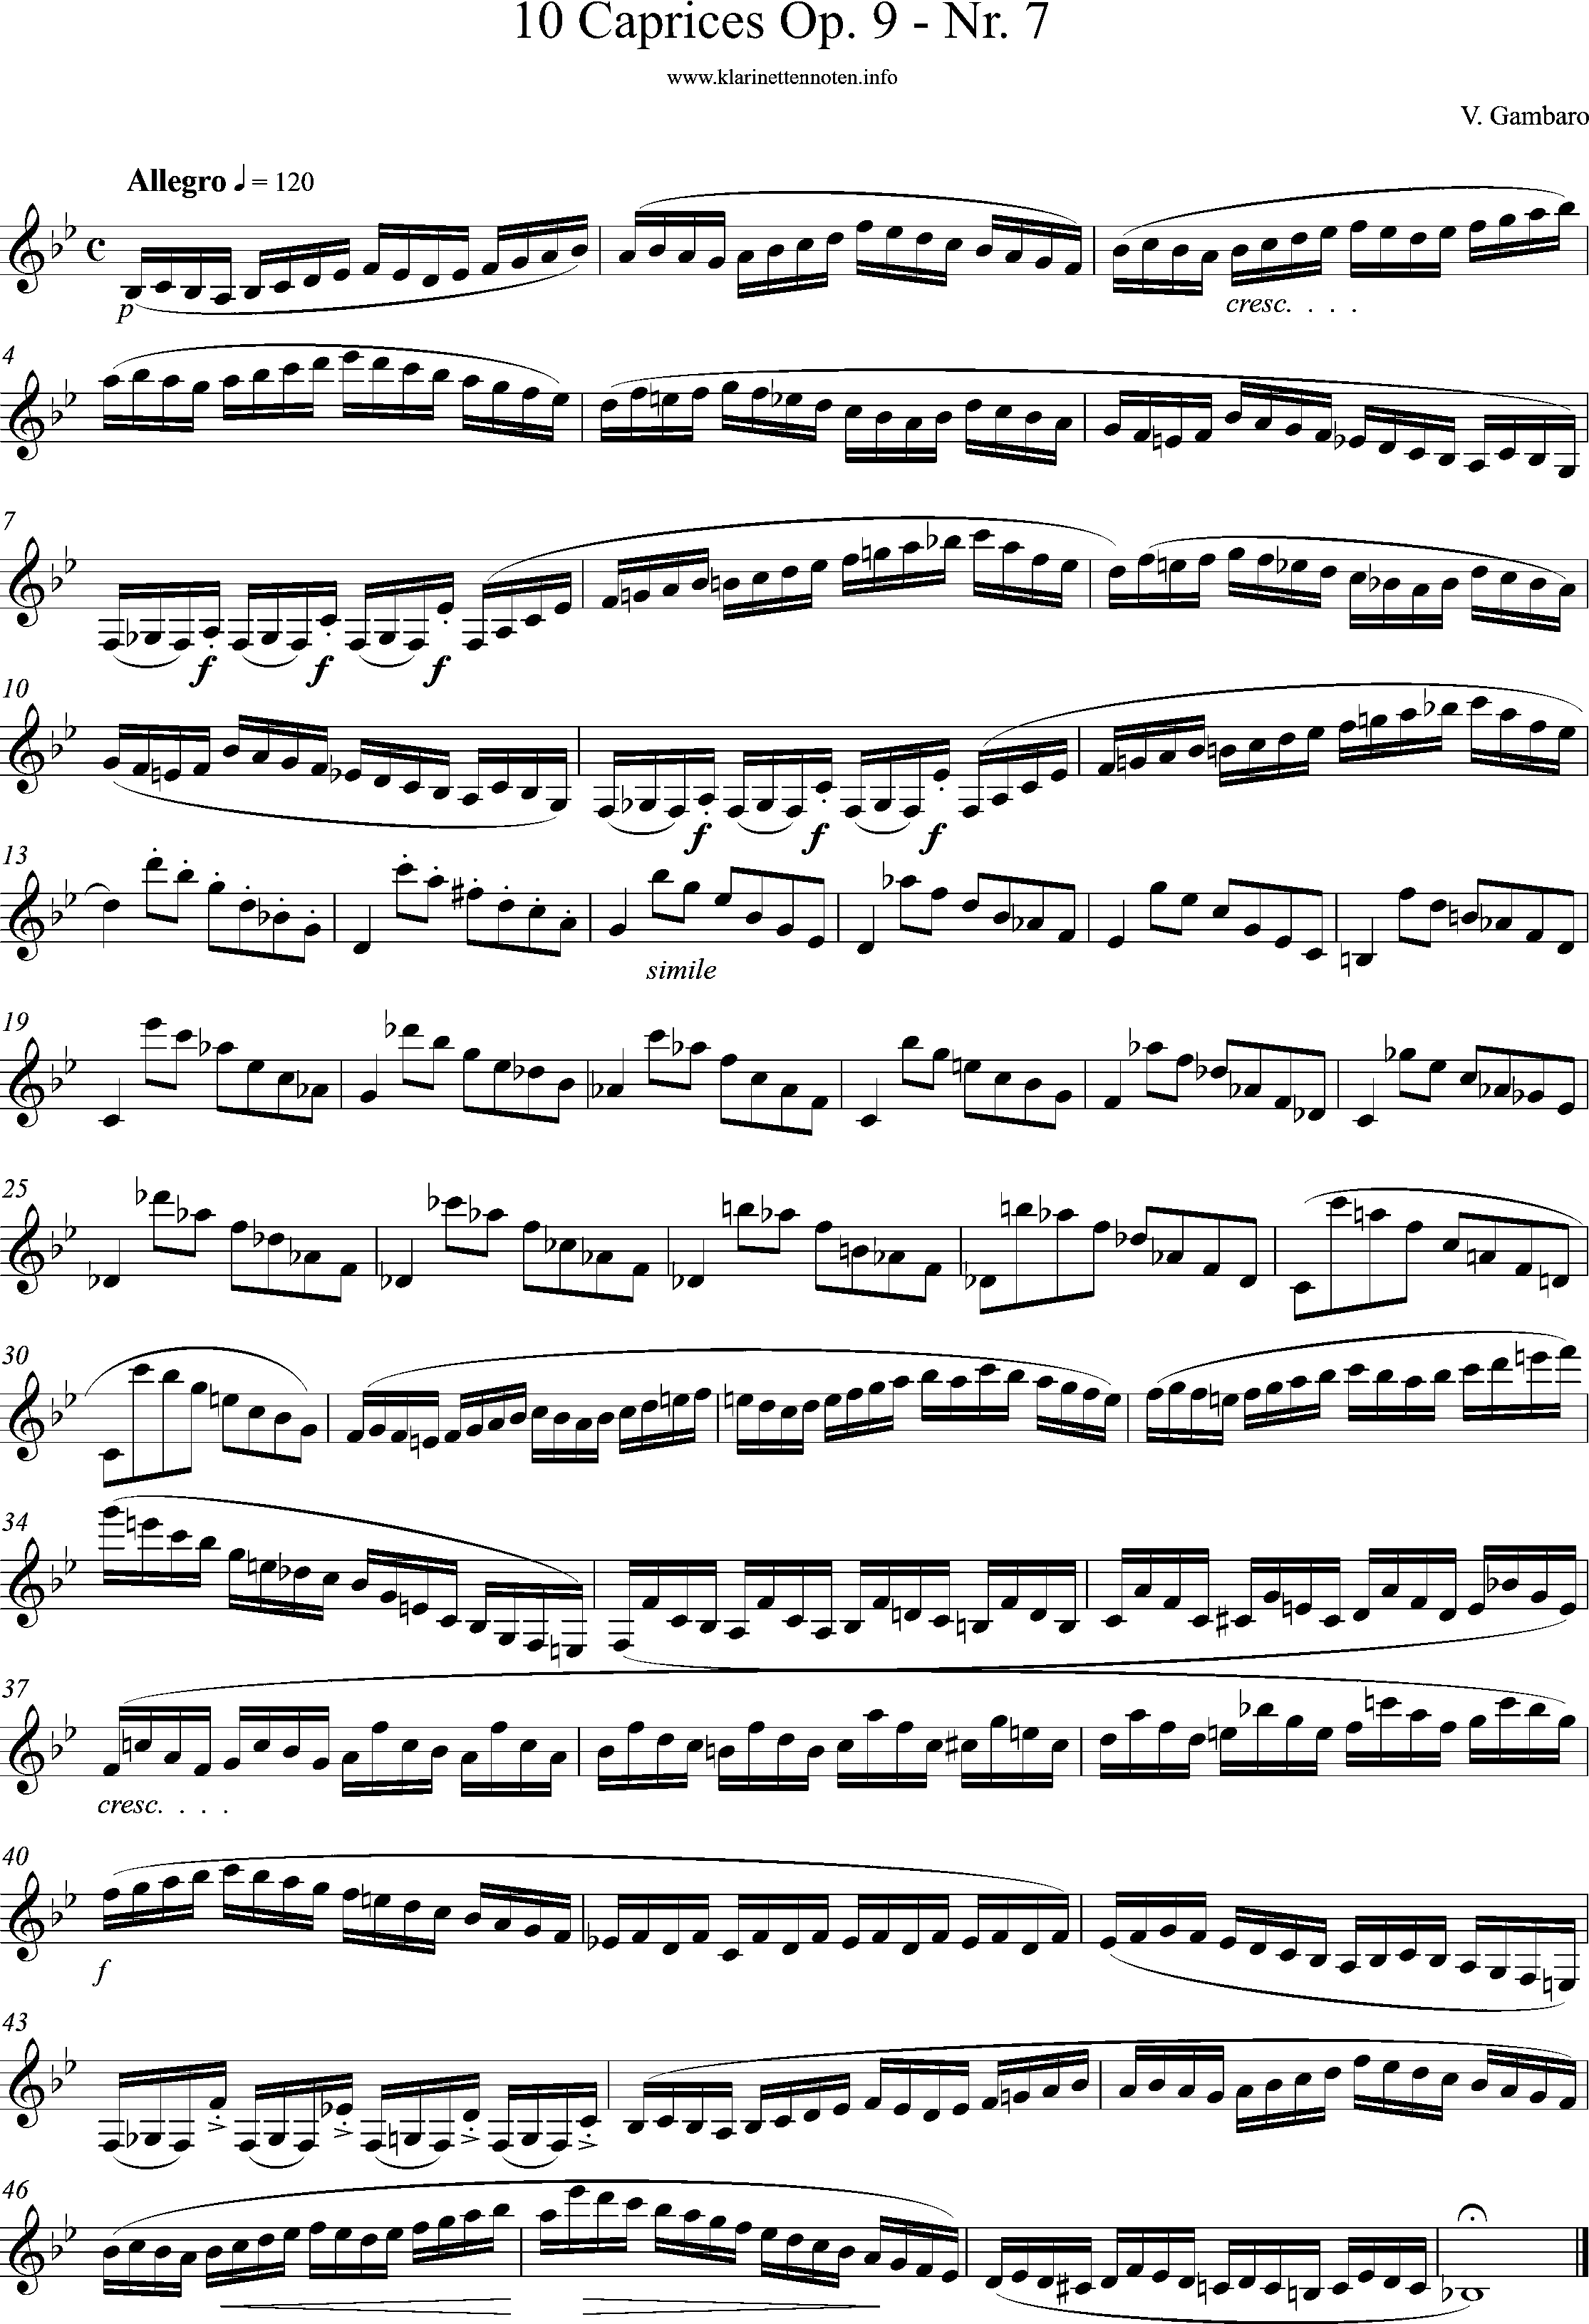 10 Caprices,op. 9, Gambaro No. 7